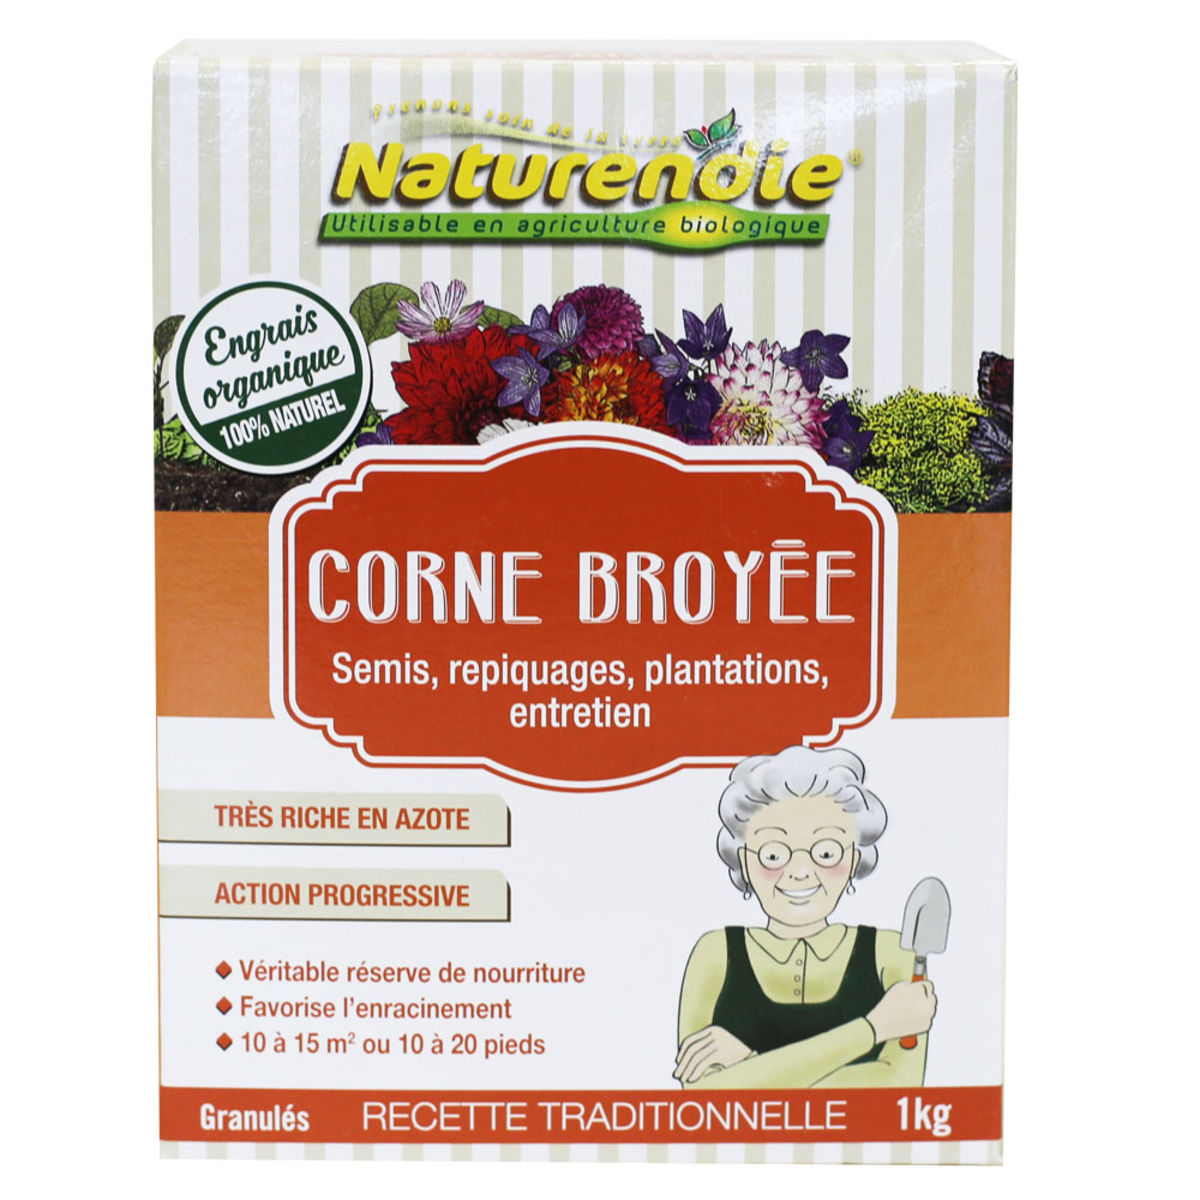 Corne broyée BIO CORN 5kg - DENORMANDIE